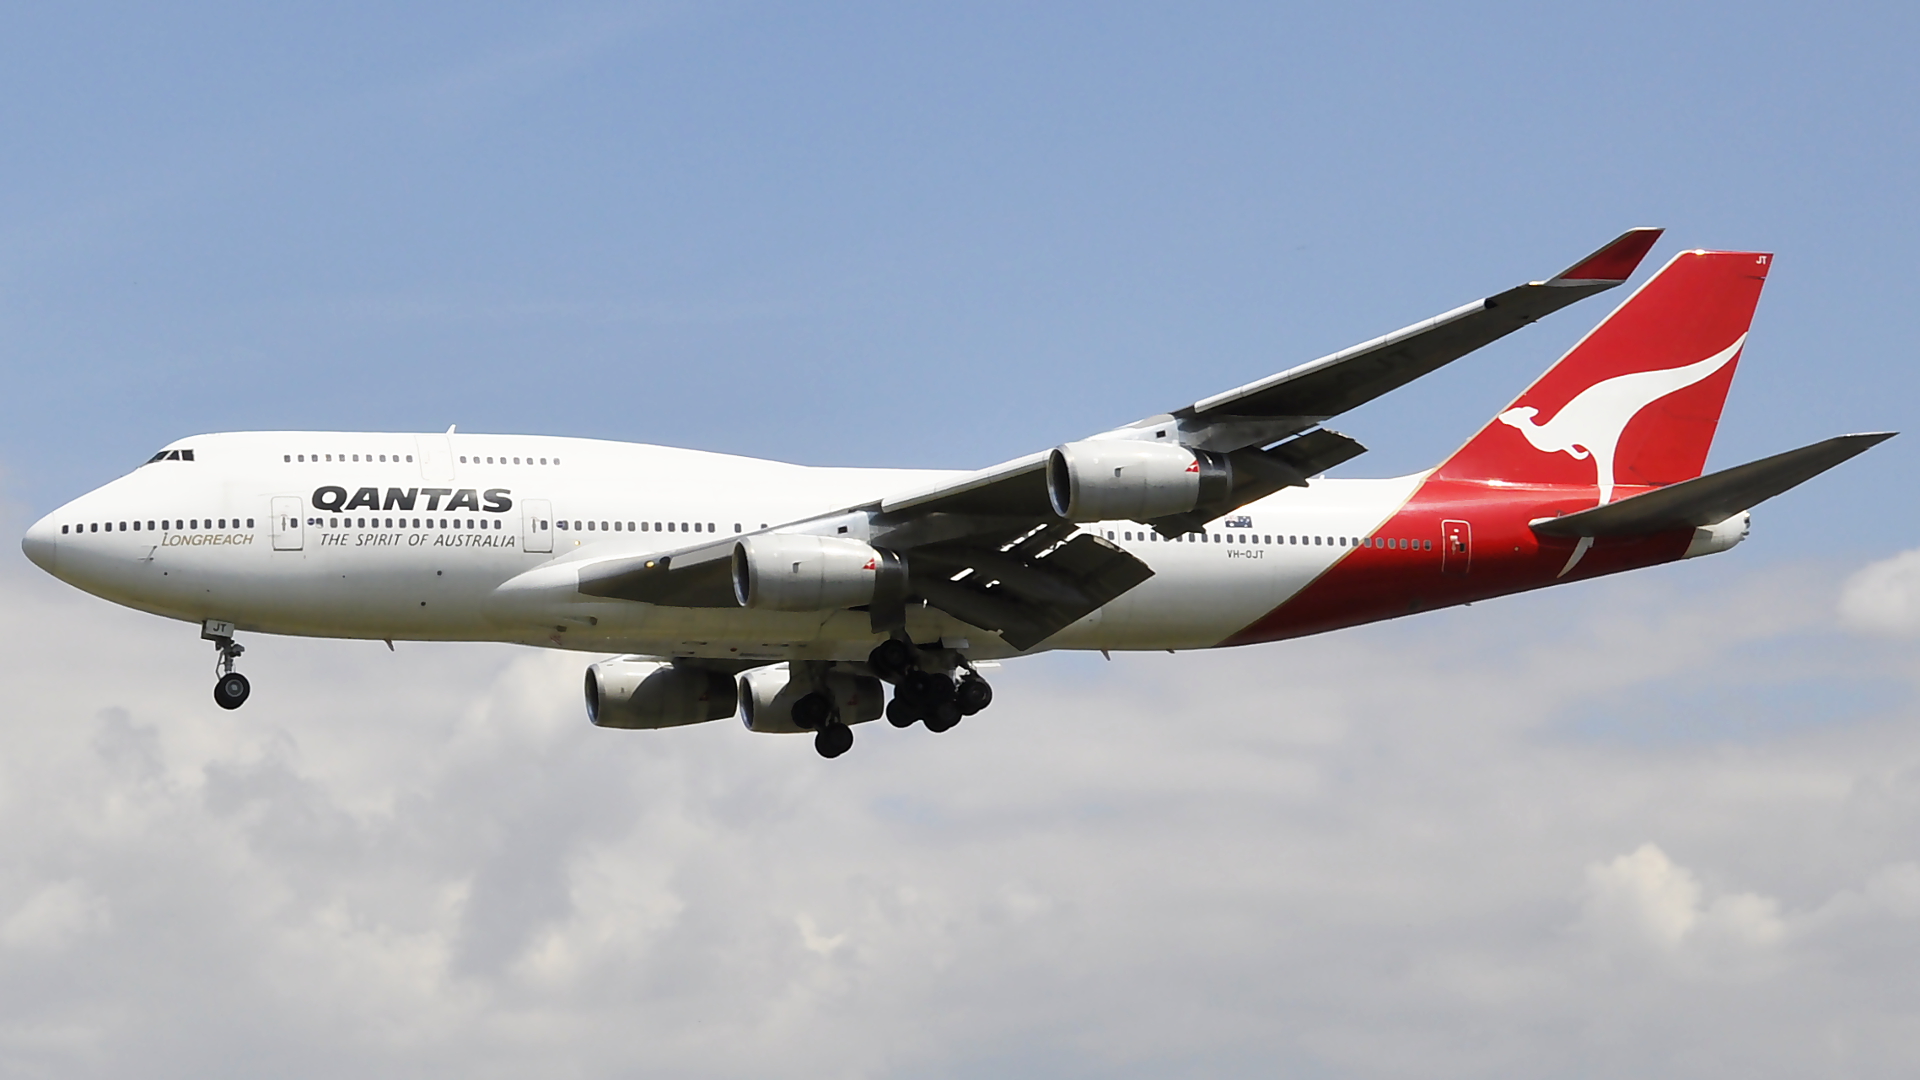 VH-OJT ✈ Qantas Boeing 747-438 @ London-Heathrow